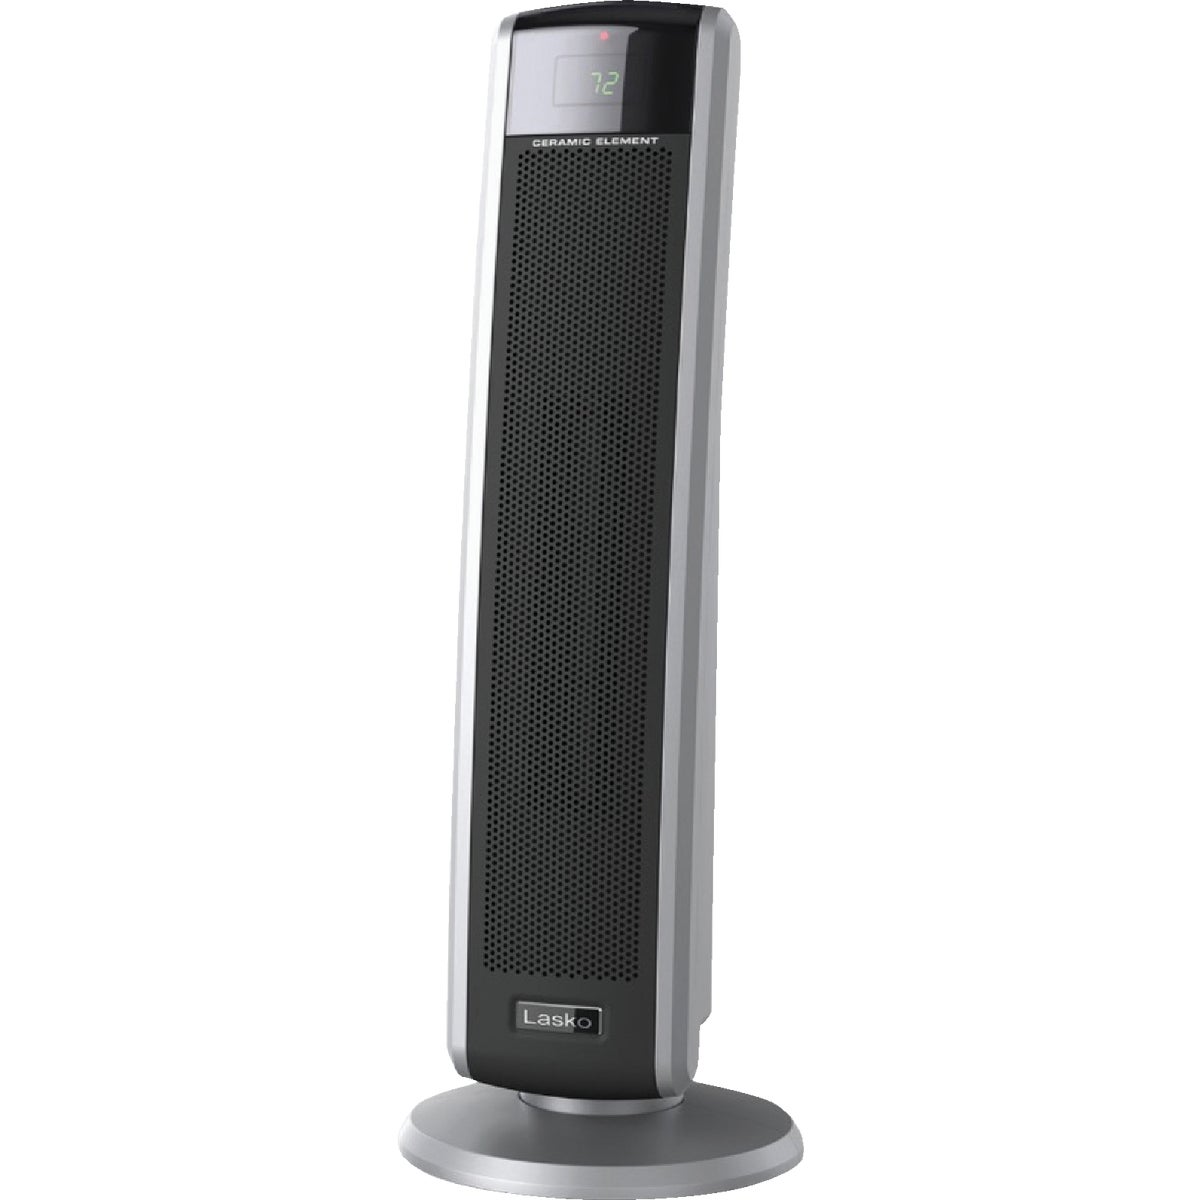 Lasko 1500W 120V Digital Ceramic Tower Heater